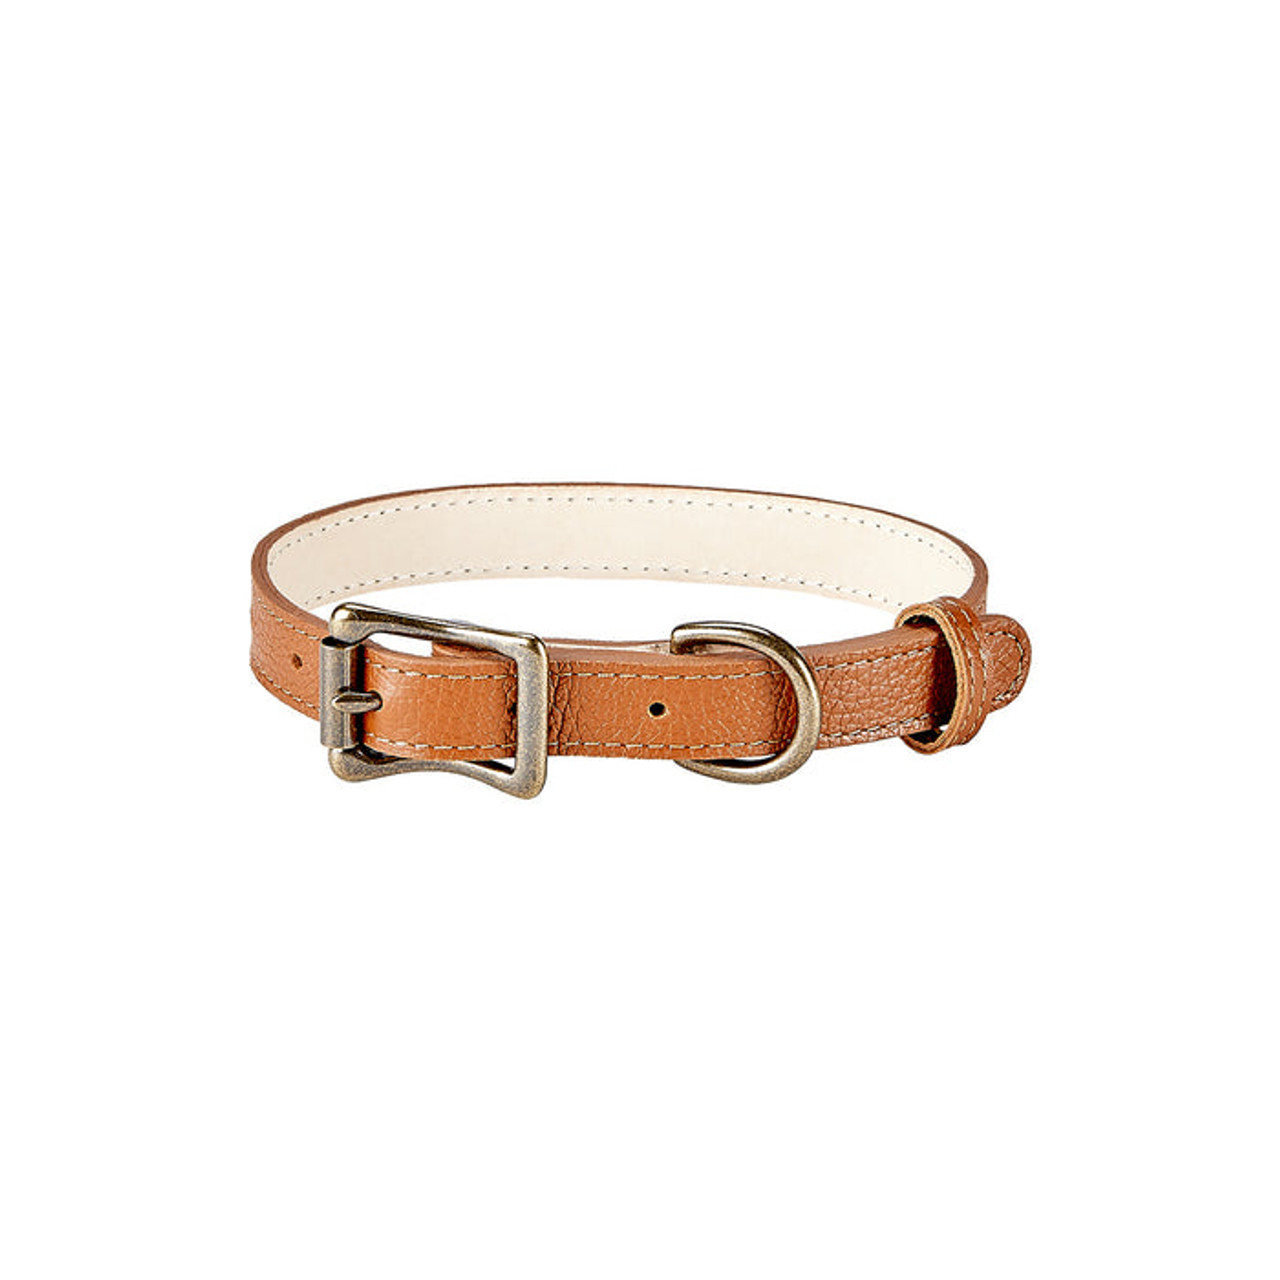 Italian Leather Dog Collar